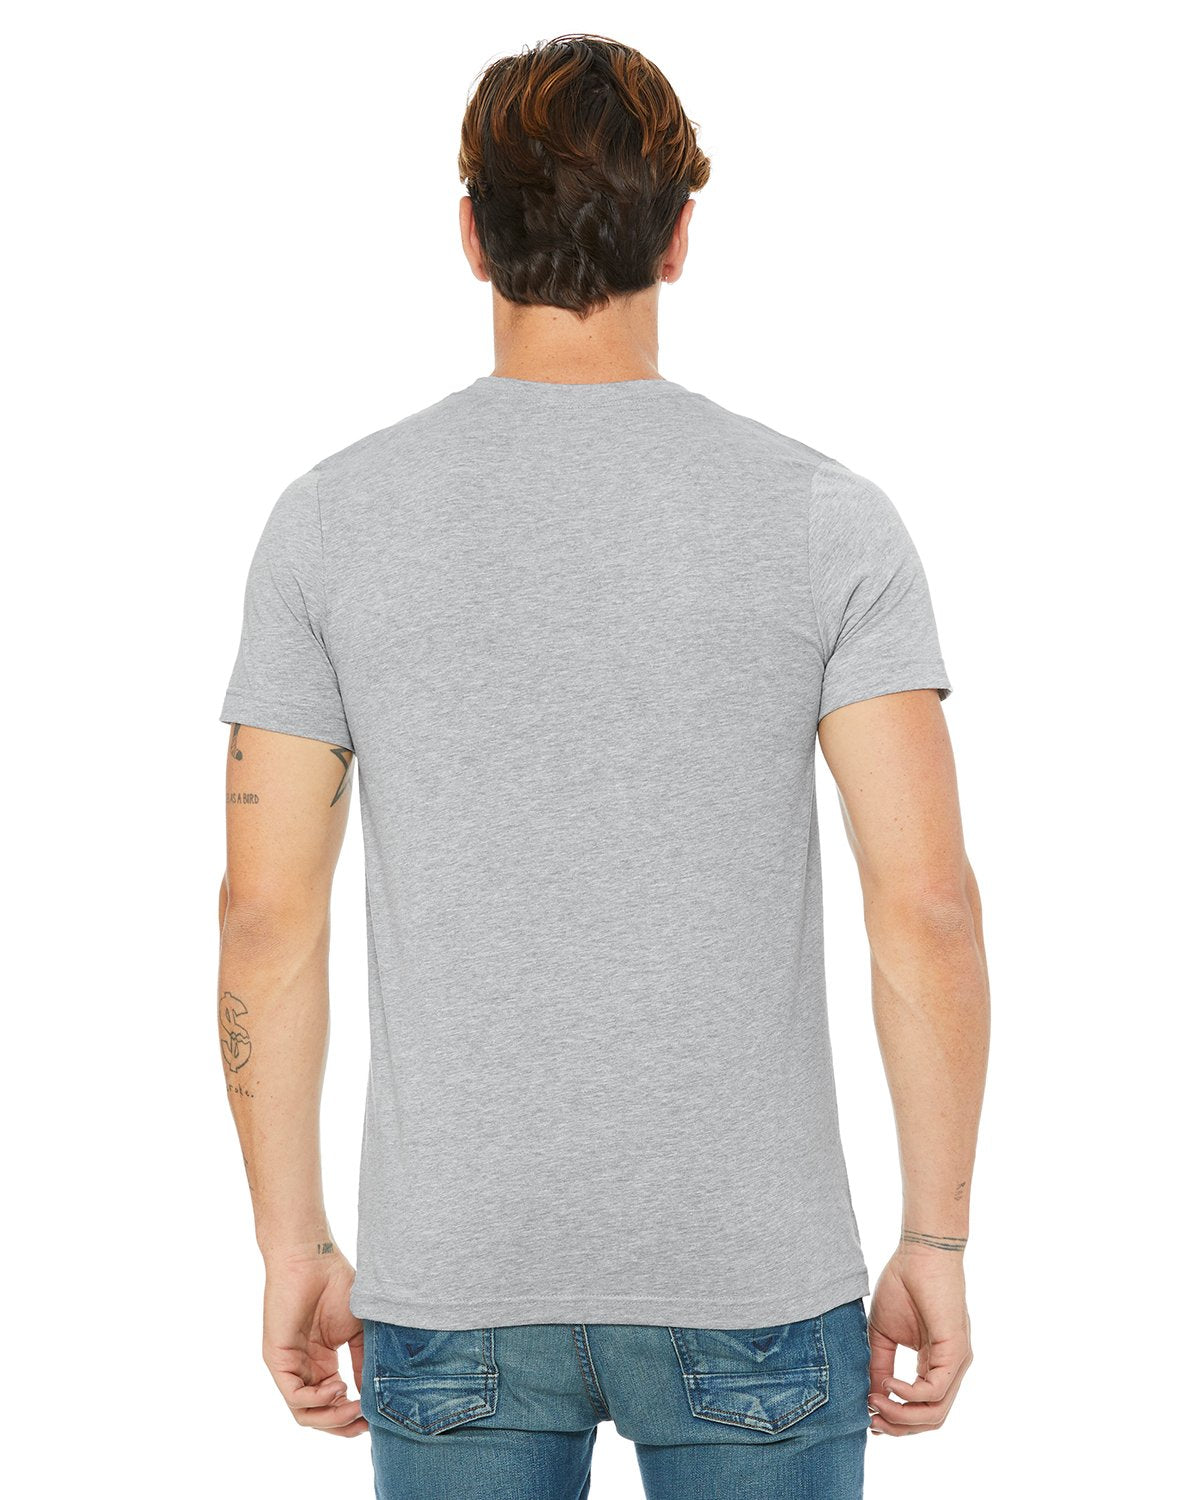 bella + canvas unisex jersey short sleeve t-shirt 3001c athletic heather